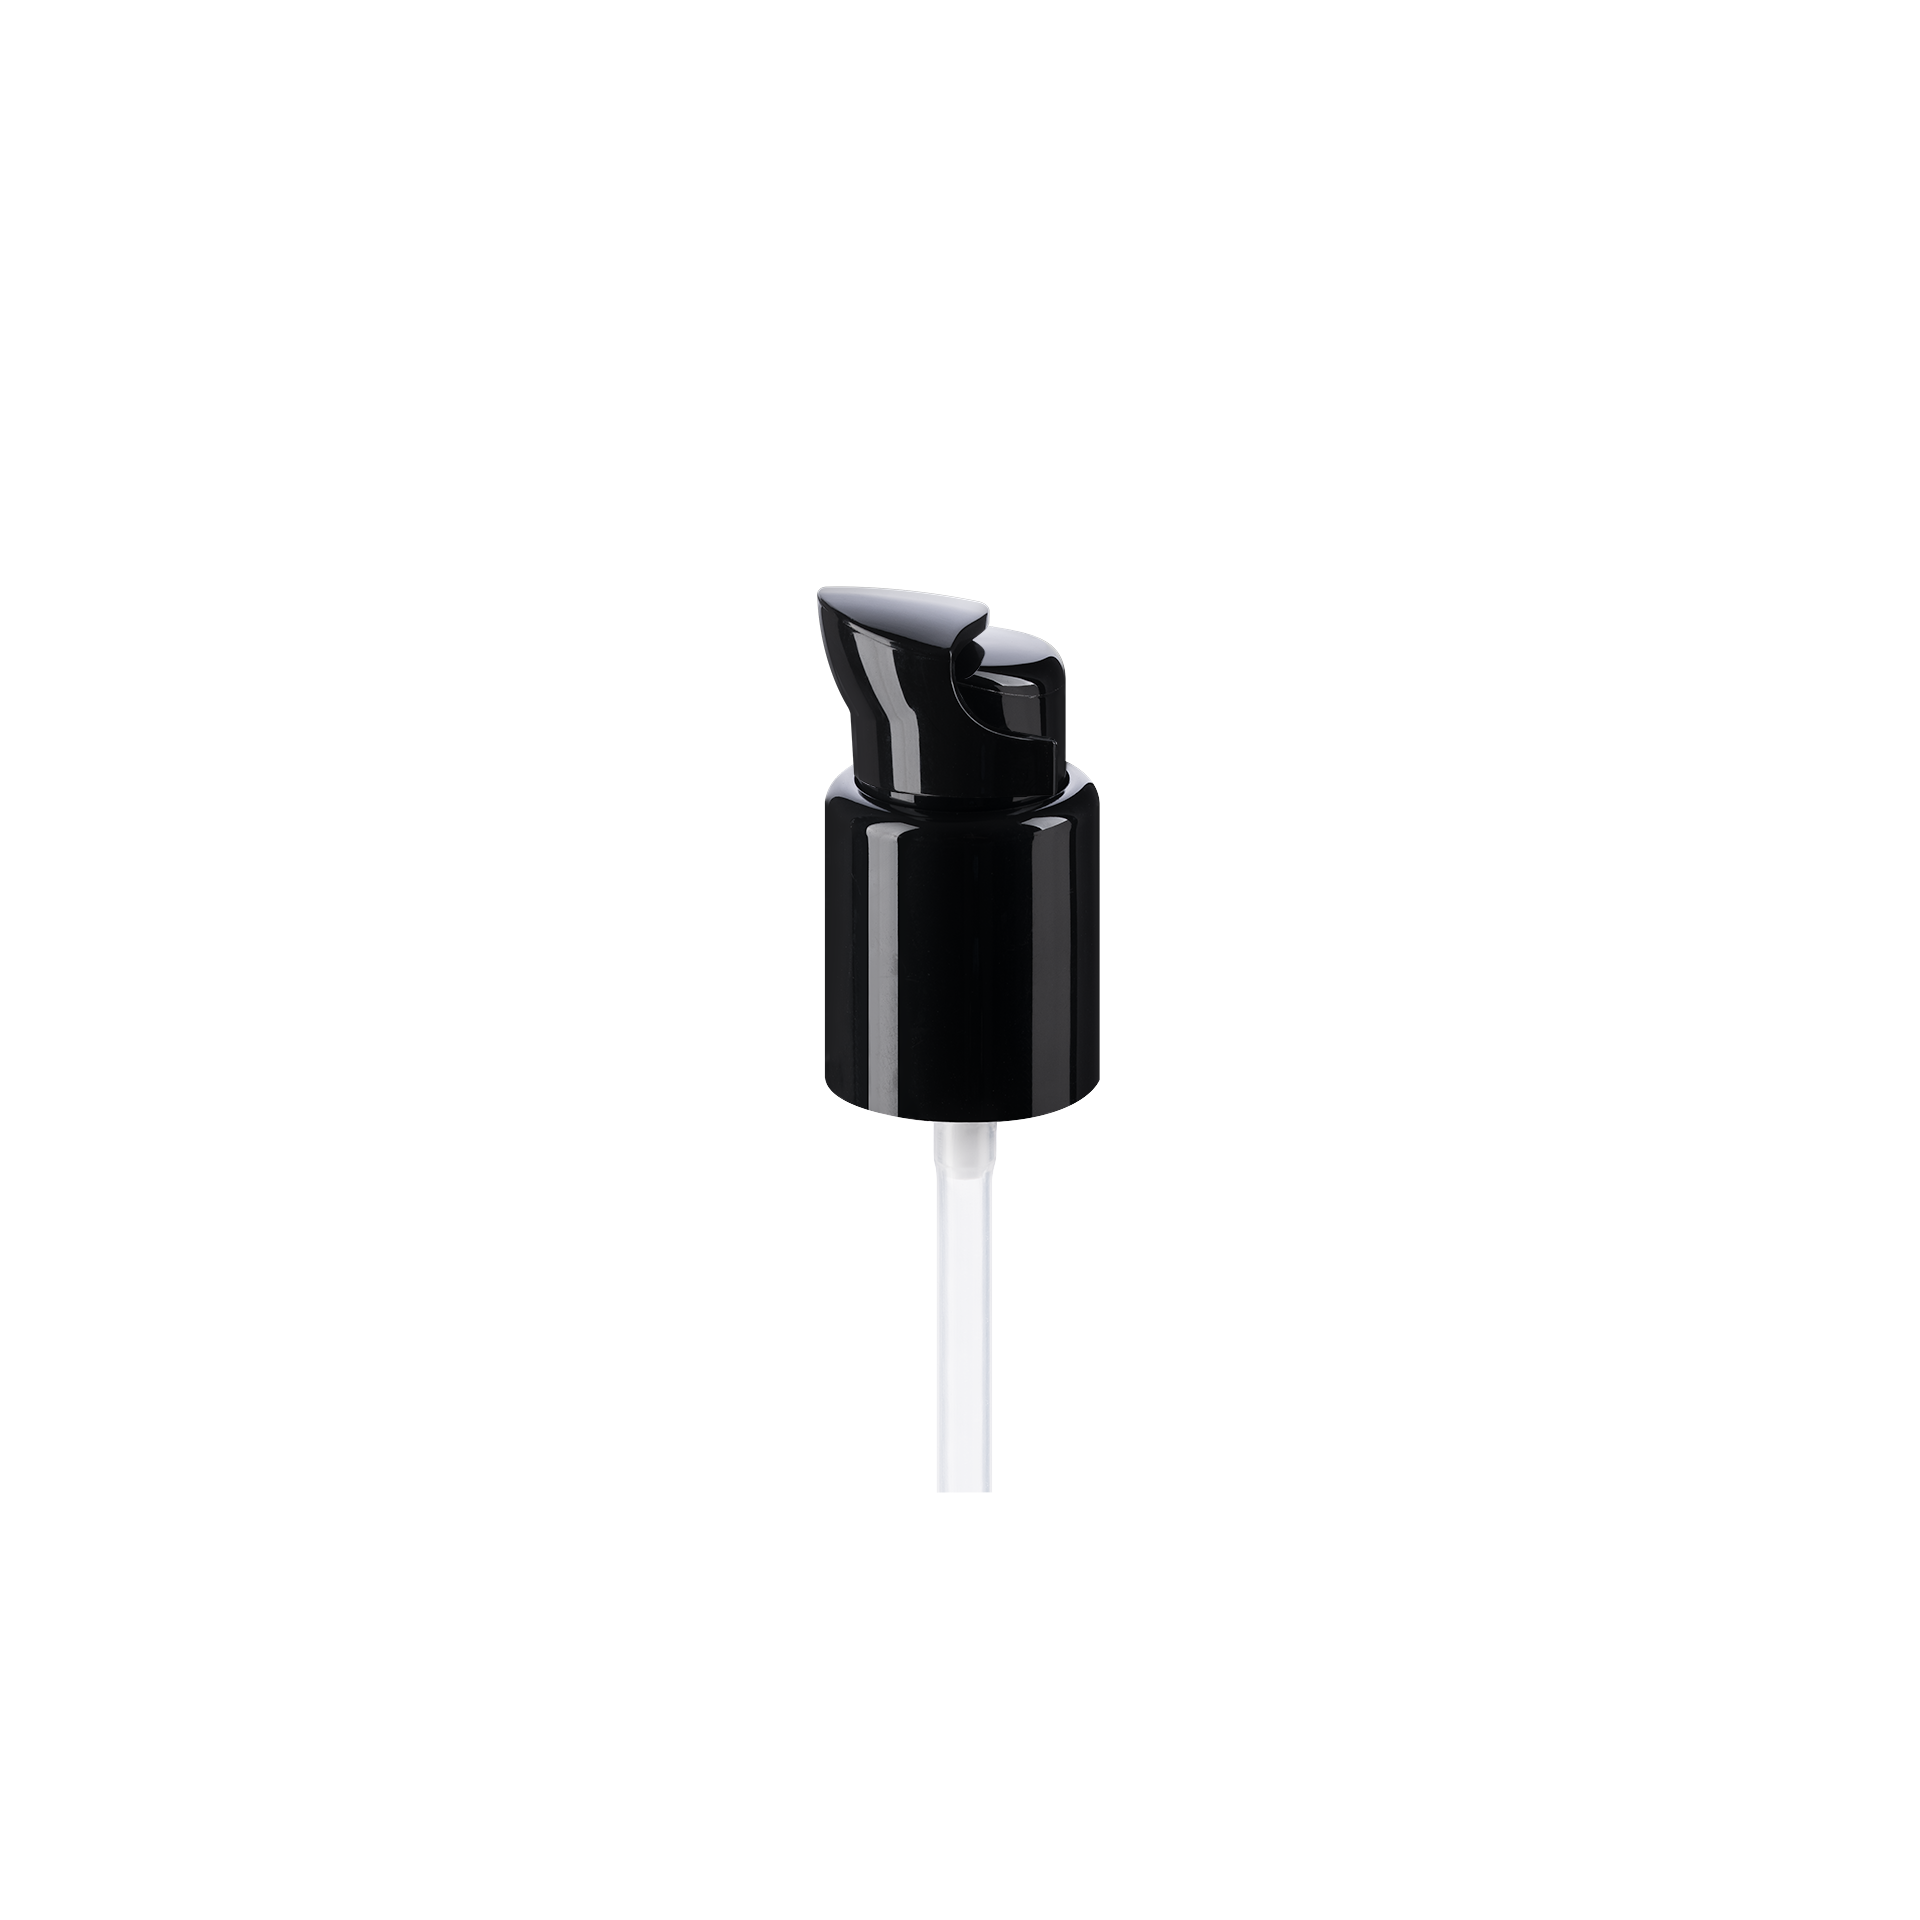 Lotion pump Metropolitan, 18/415, PP, black, dose 0.15ml, black security clip (Laurel 15)